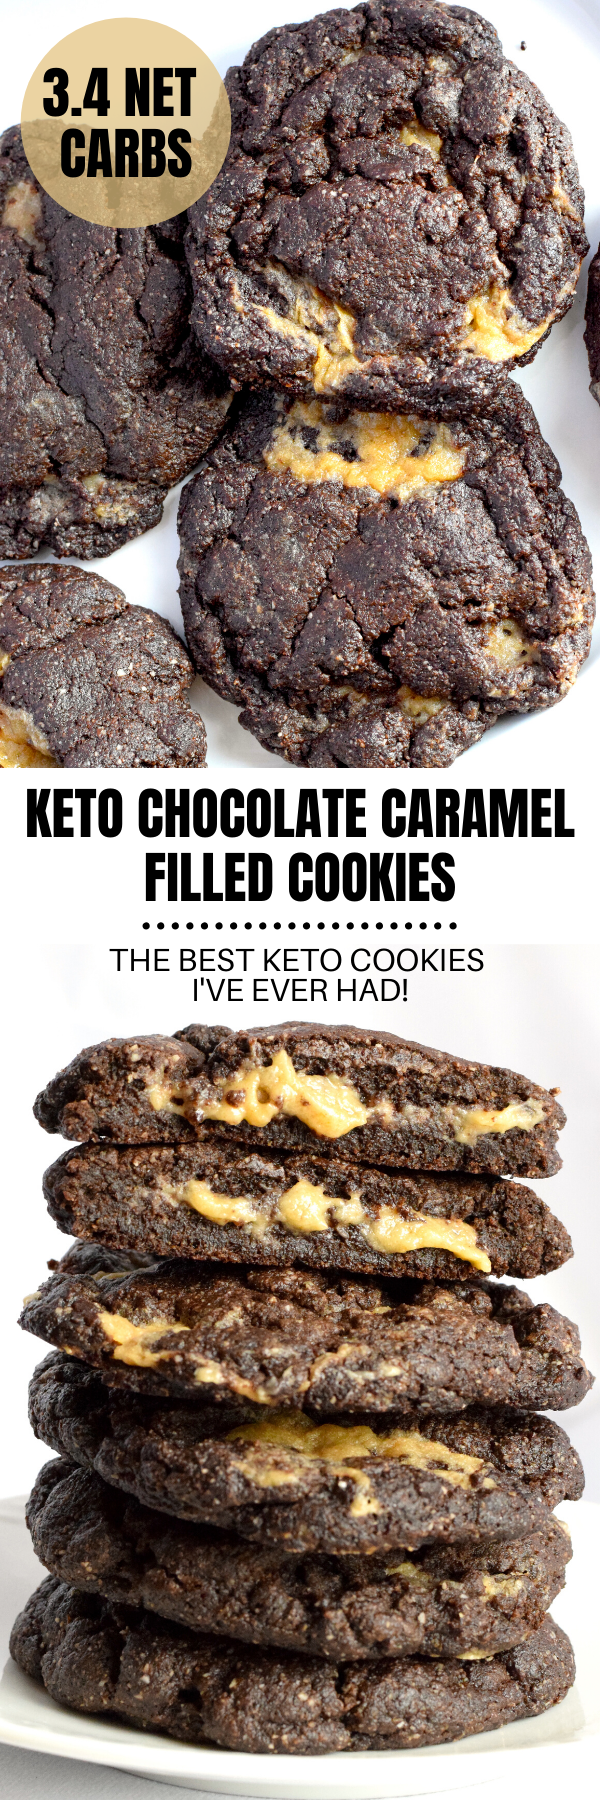 keto chocolate caramel filled cookies